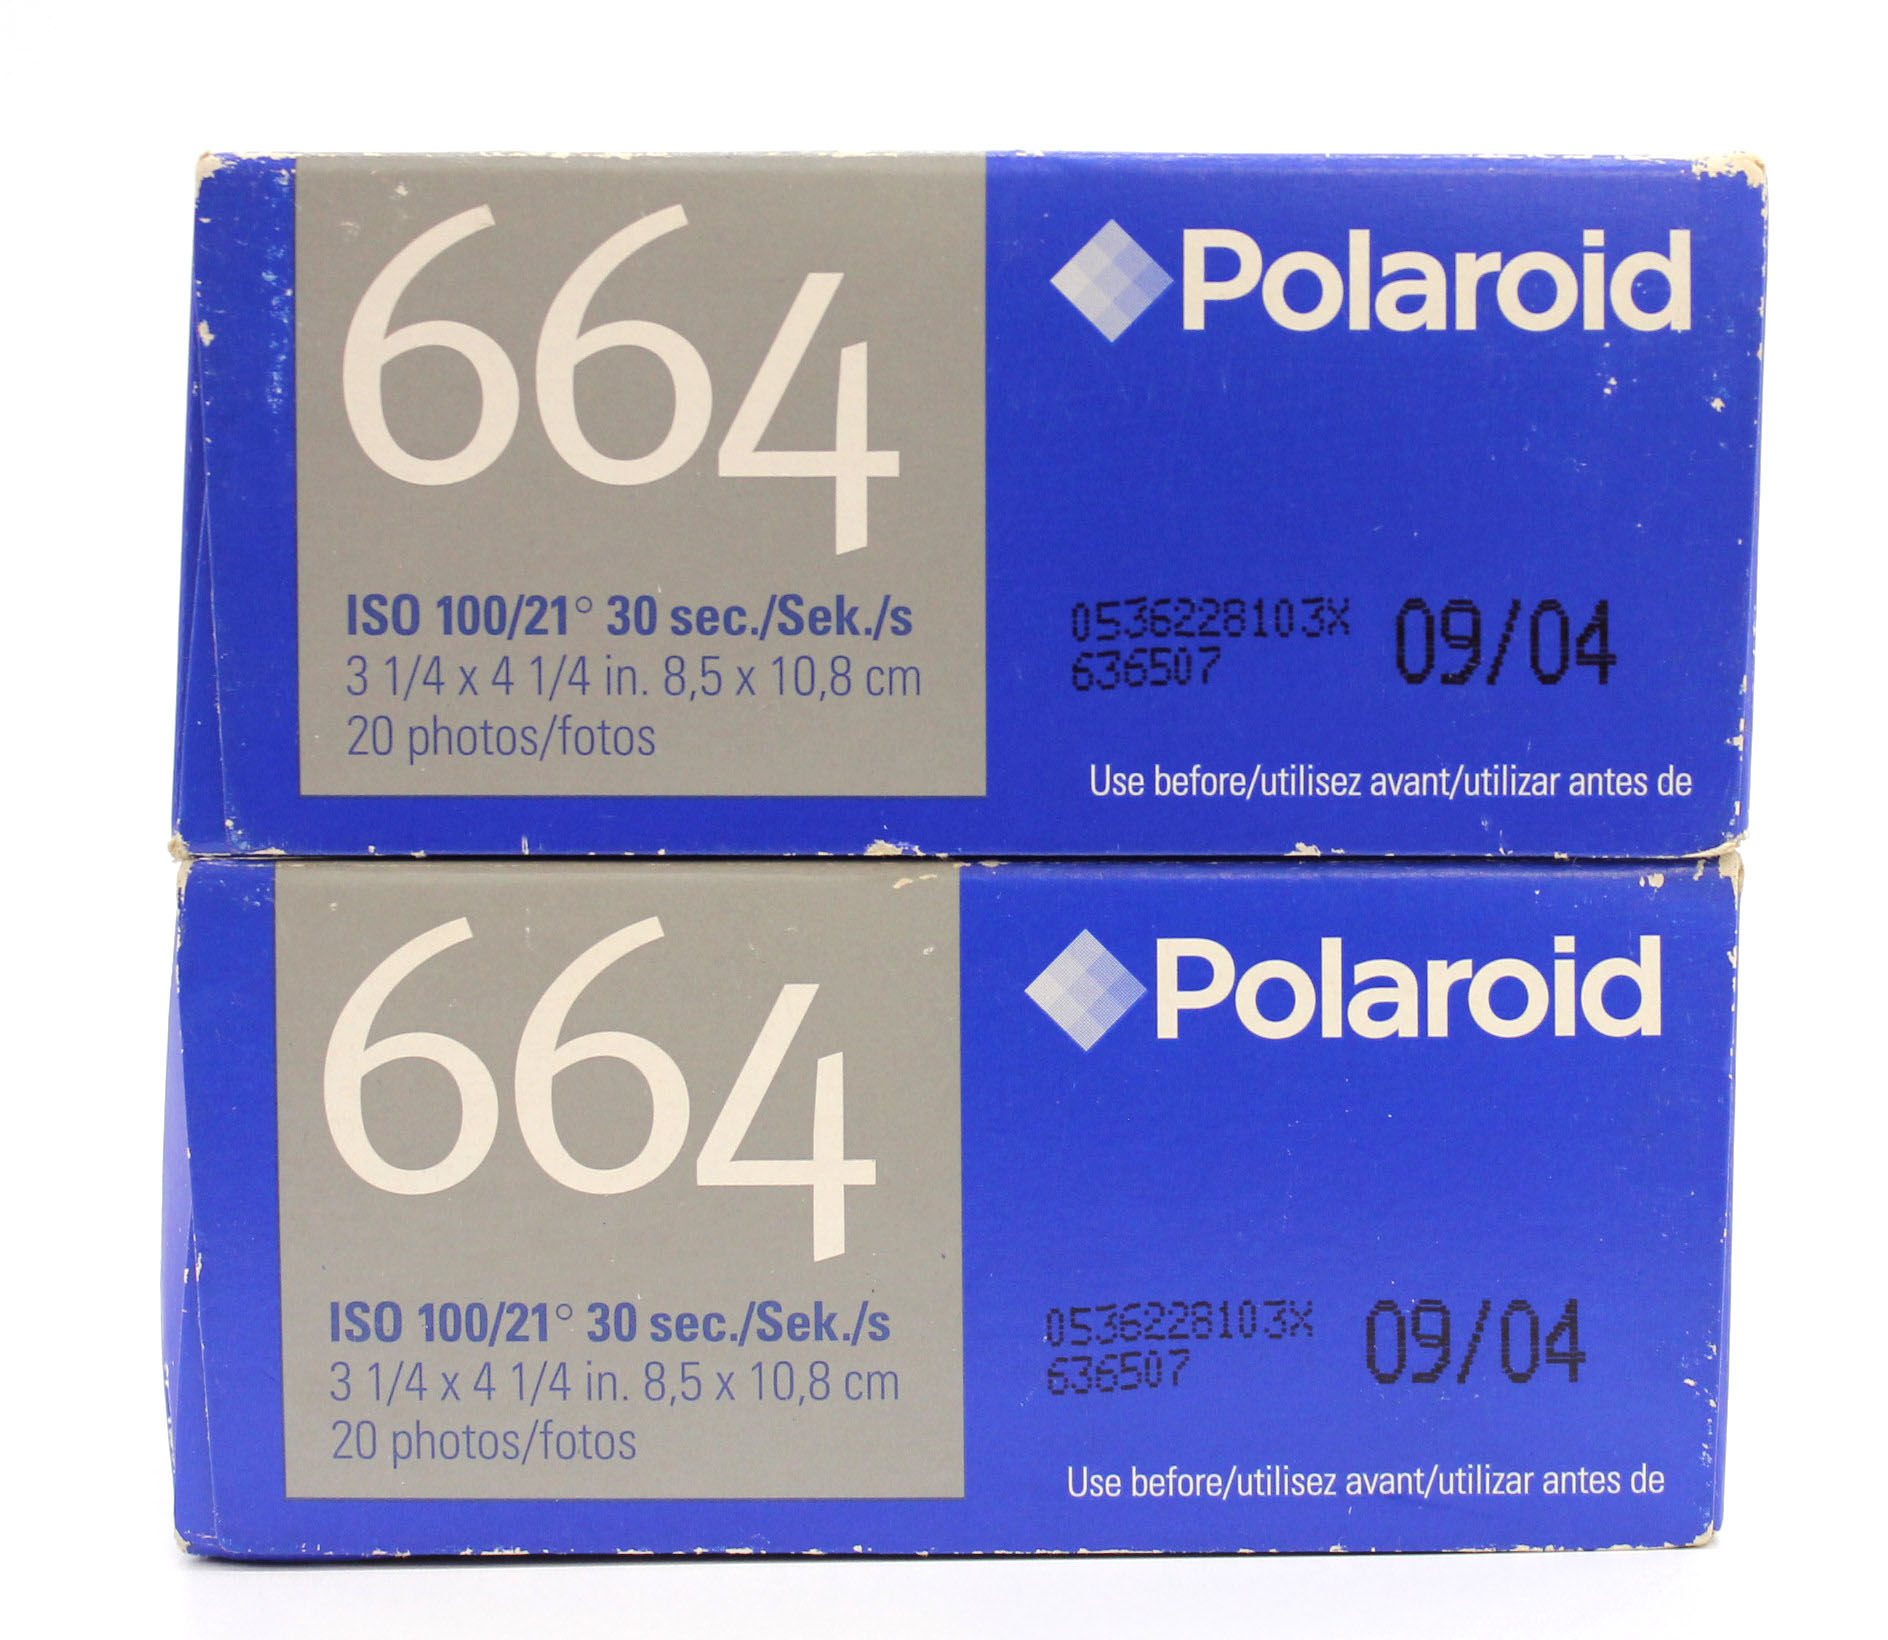  Polaroid 664 B&W Black & White Instant Pack Film (2 Packs) Type 100 Expired 09/04 from Japan Photo 2